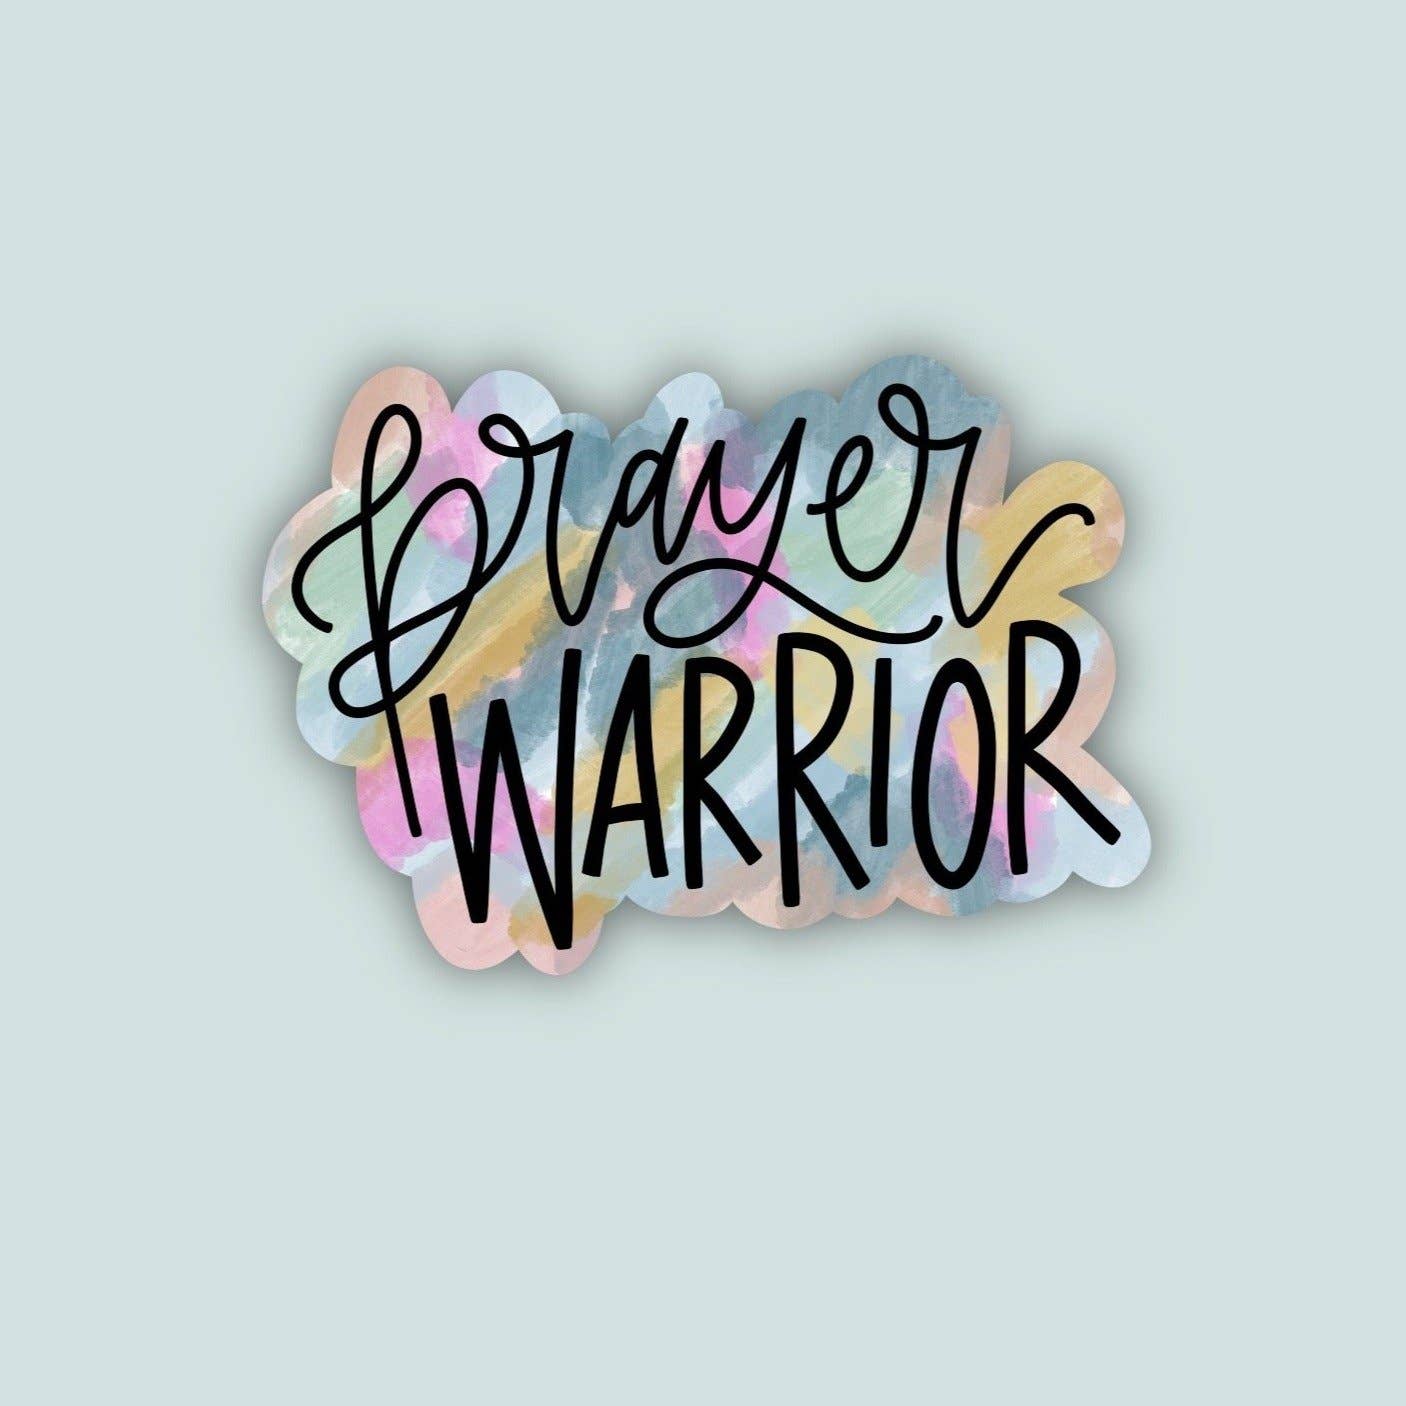 Prayer Warrior Waterproof Vinyl Sticker – Paisley Grace Makery